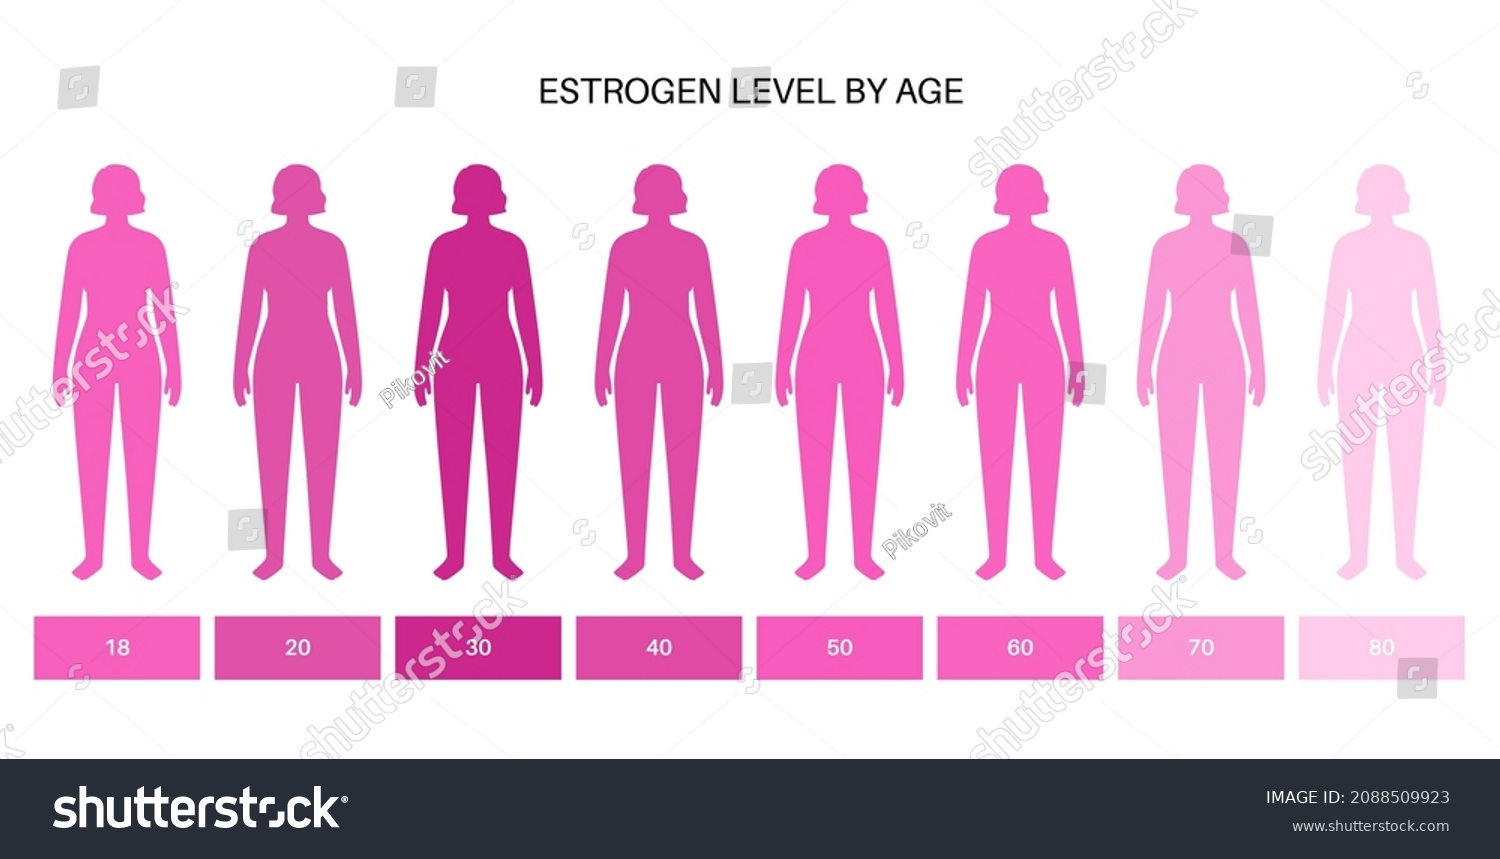 Estrogen Level Color Chart Sex Hormone Stock Vector Royalty Free 2088509923 3285